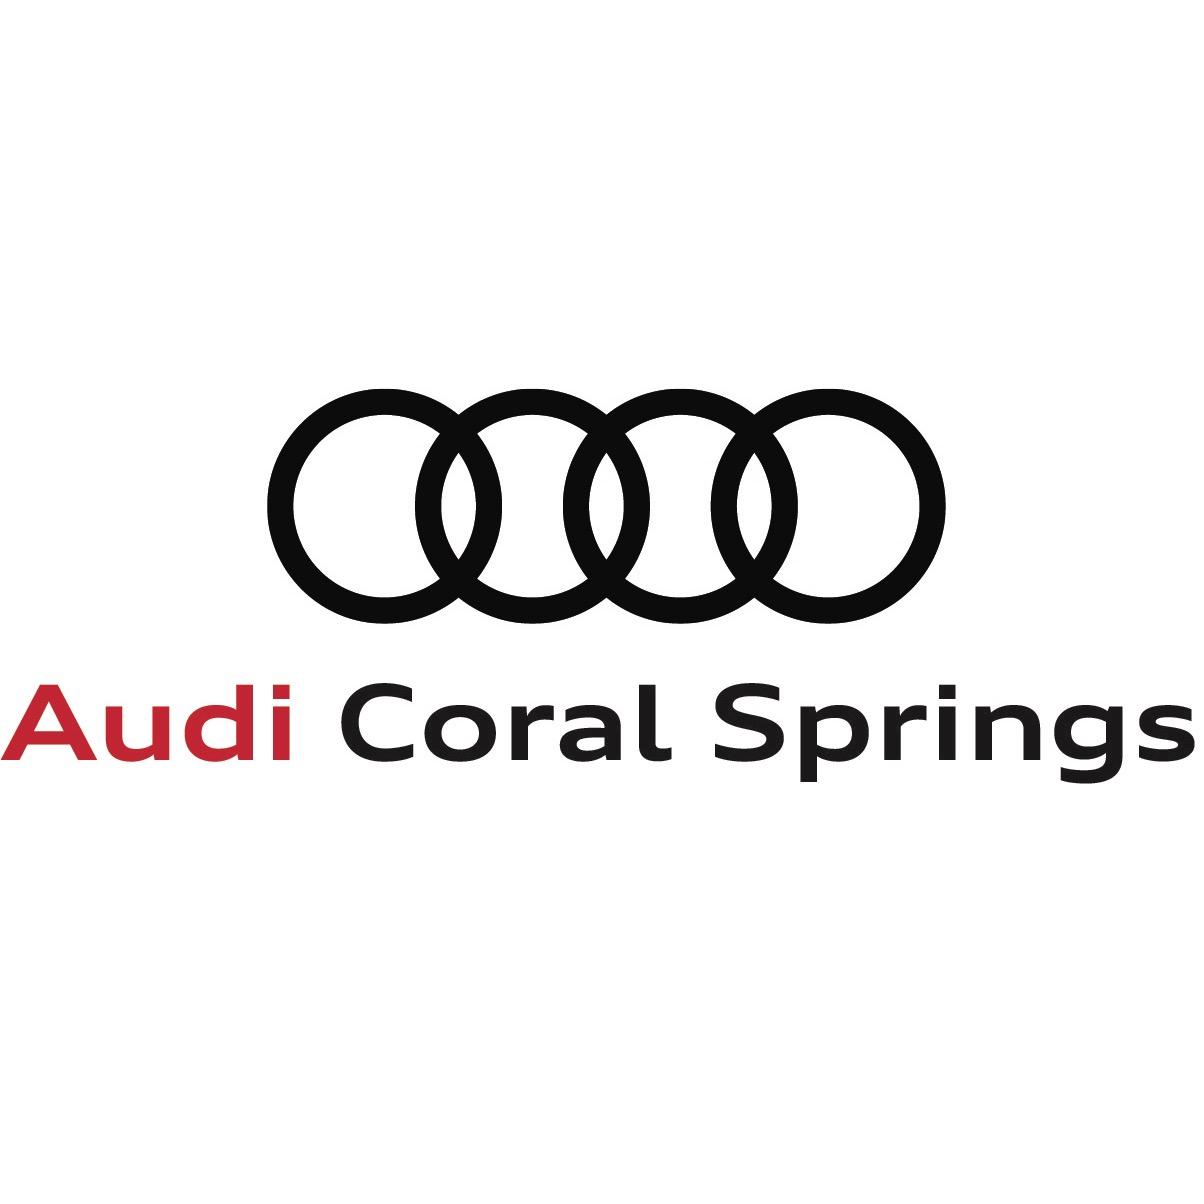 Audi Coral Springs - Coral Springs, FL 33073 - (954)509-8960 | ShowMeLocal.com